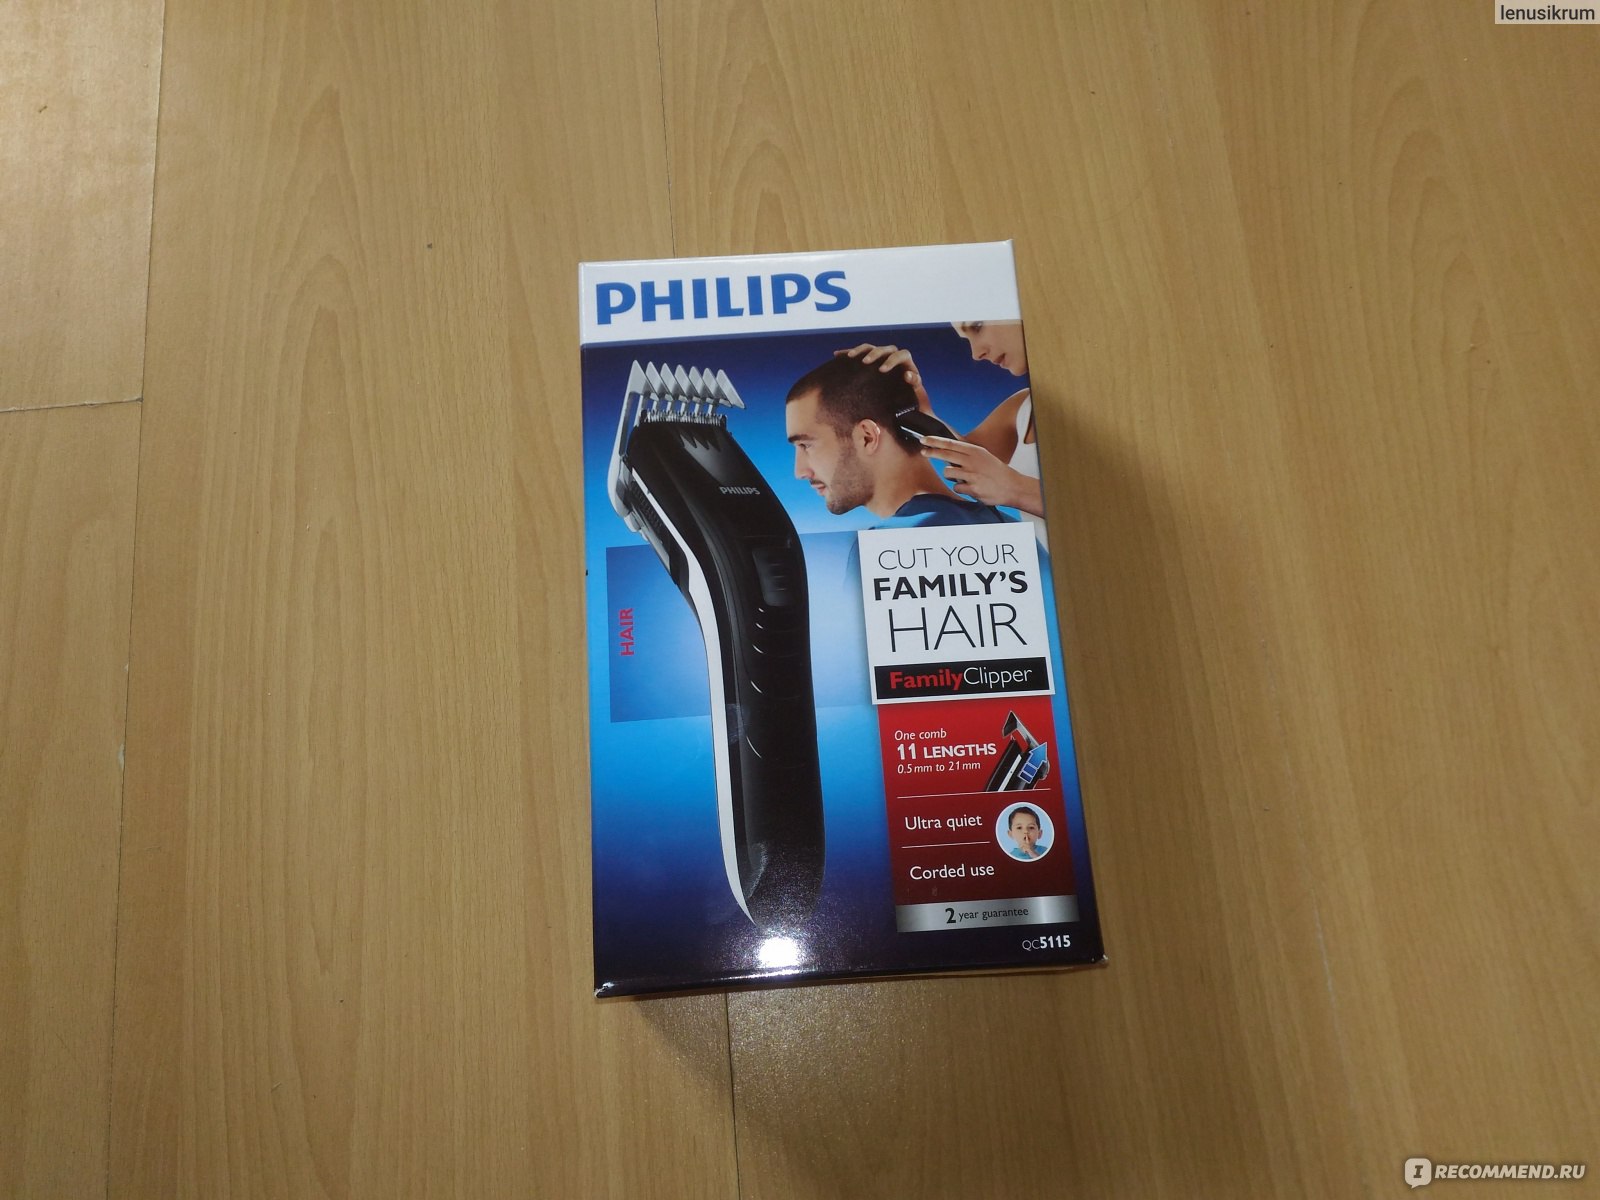 Philips машинка для стрижки qc 5115 в украине